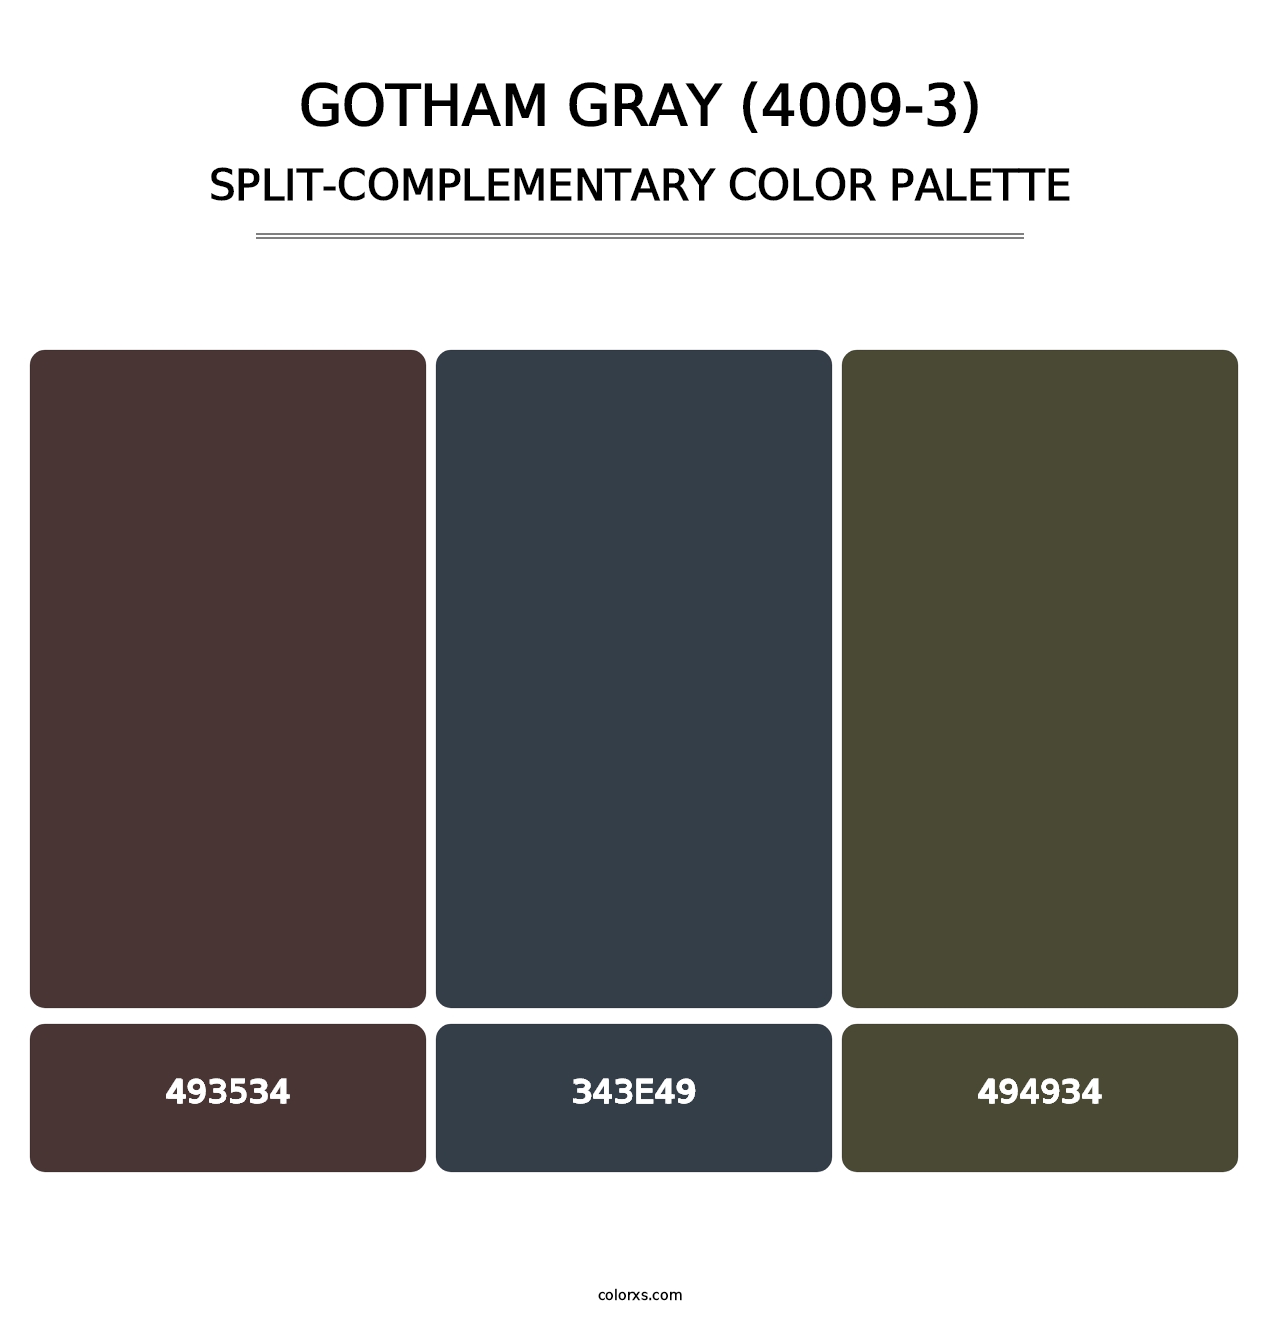 Gotham Gray (4009-3) - Split-Complementary Color Palette